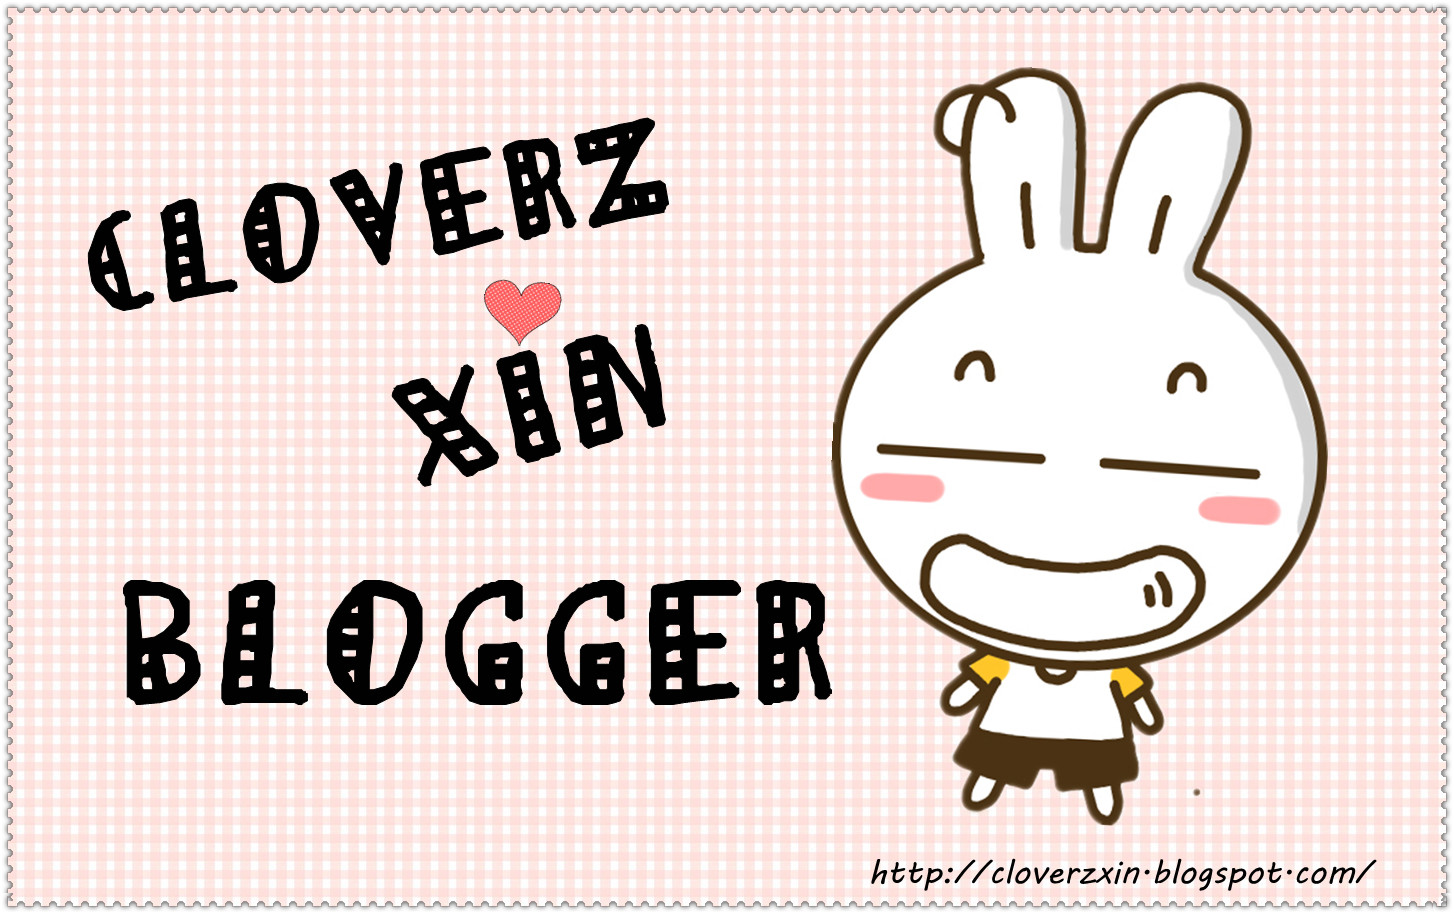 Cloverz Xin Blog xD